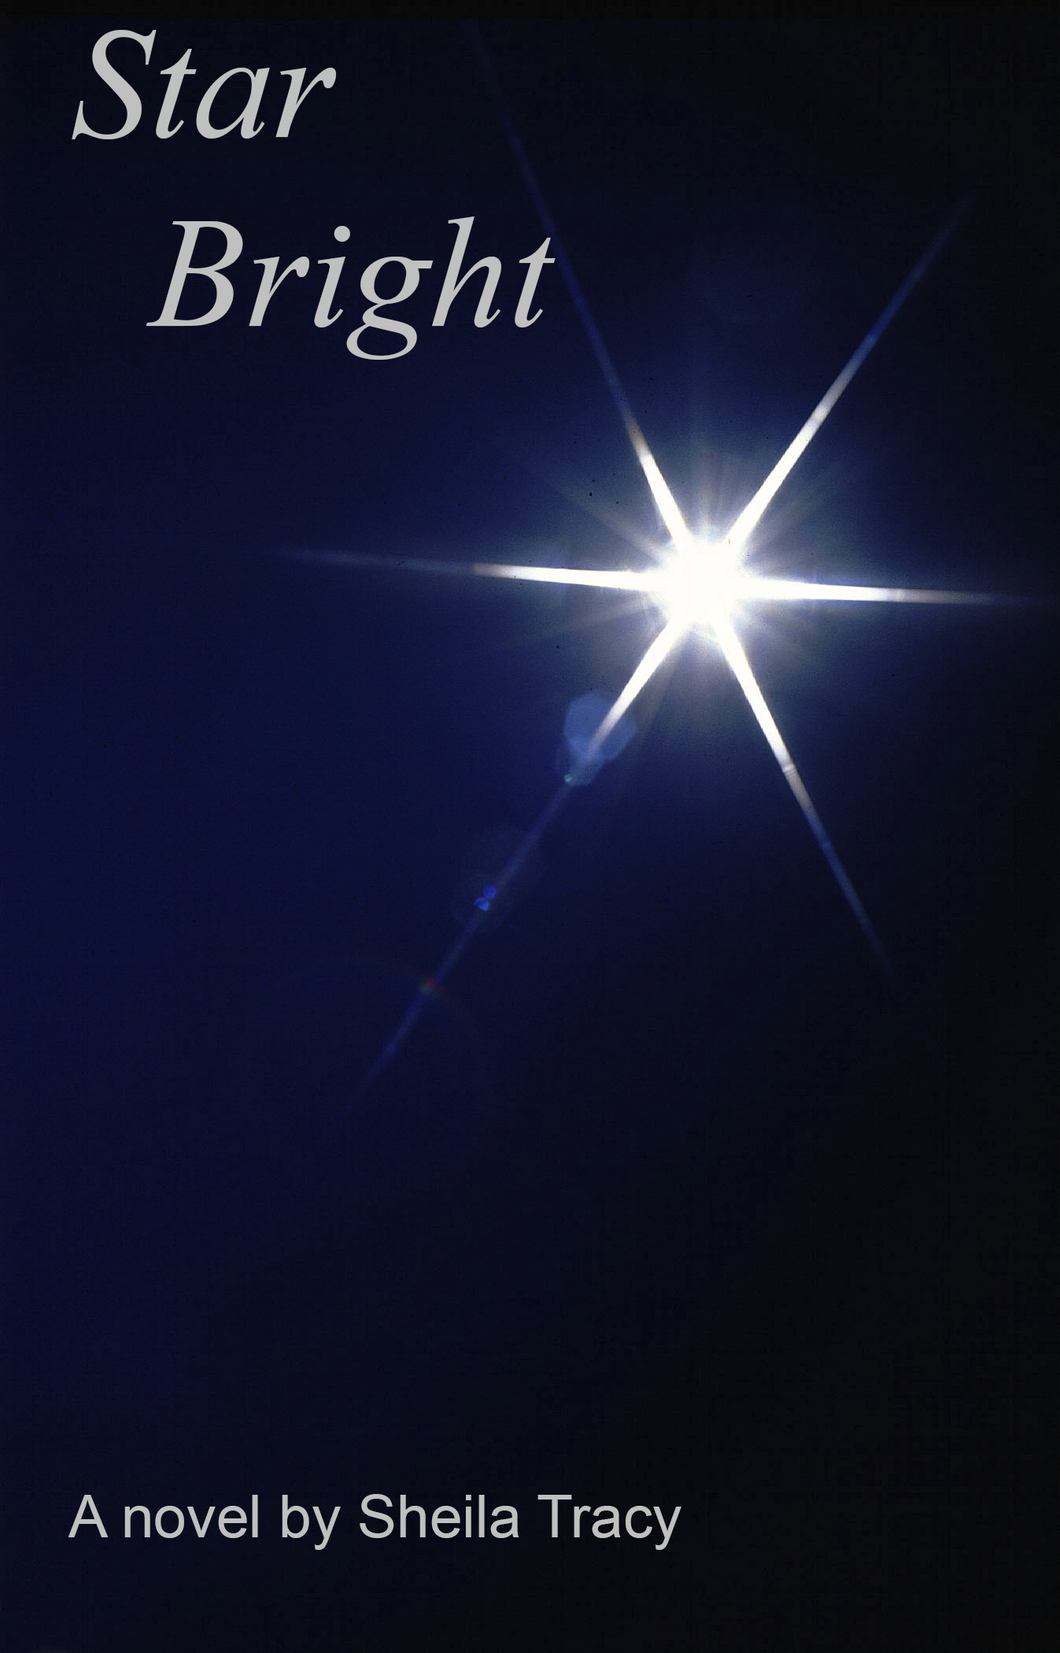 Star Bright by Sheila Tracy